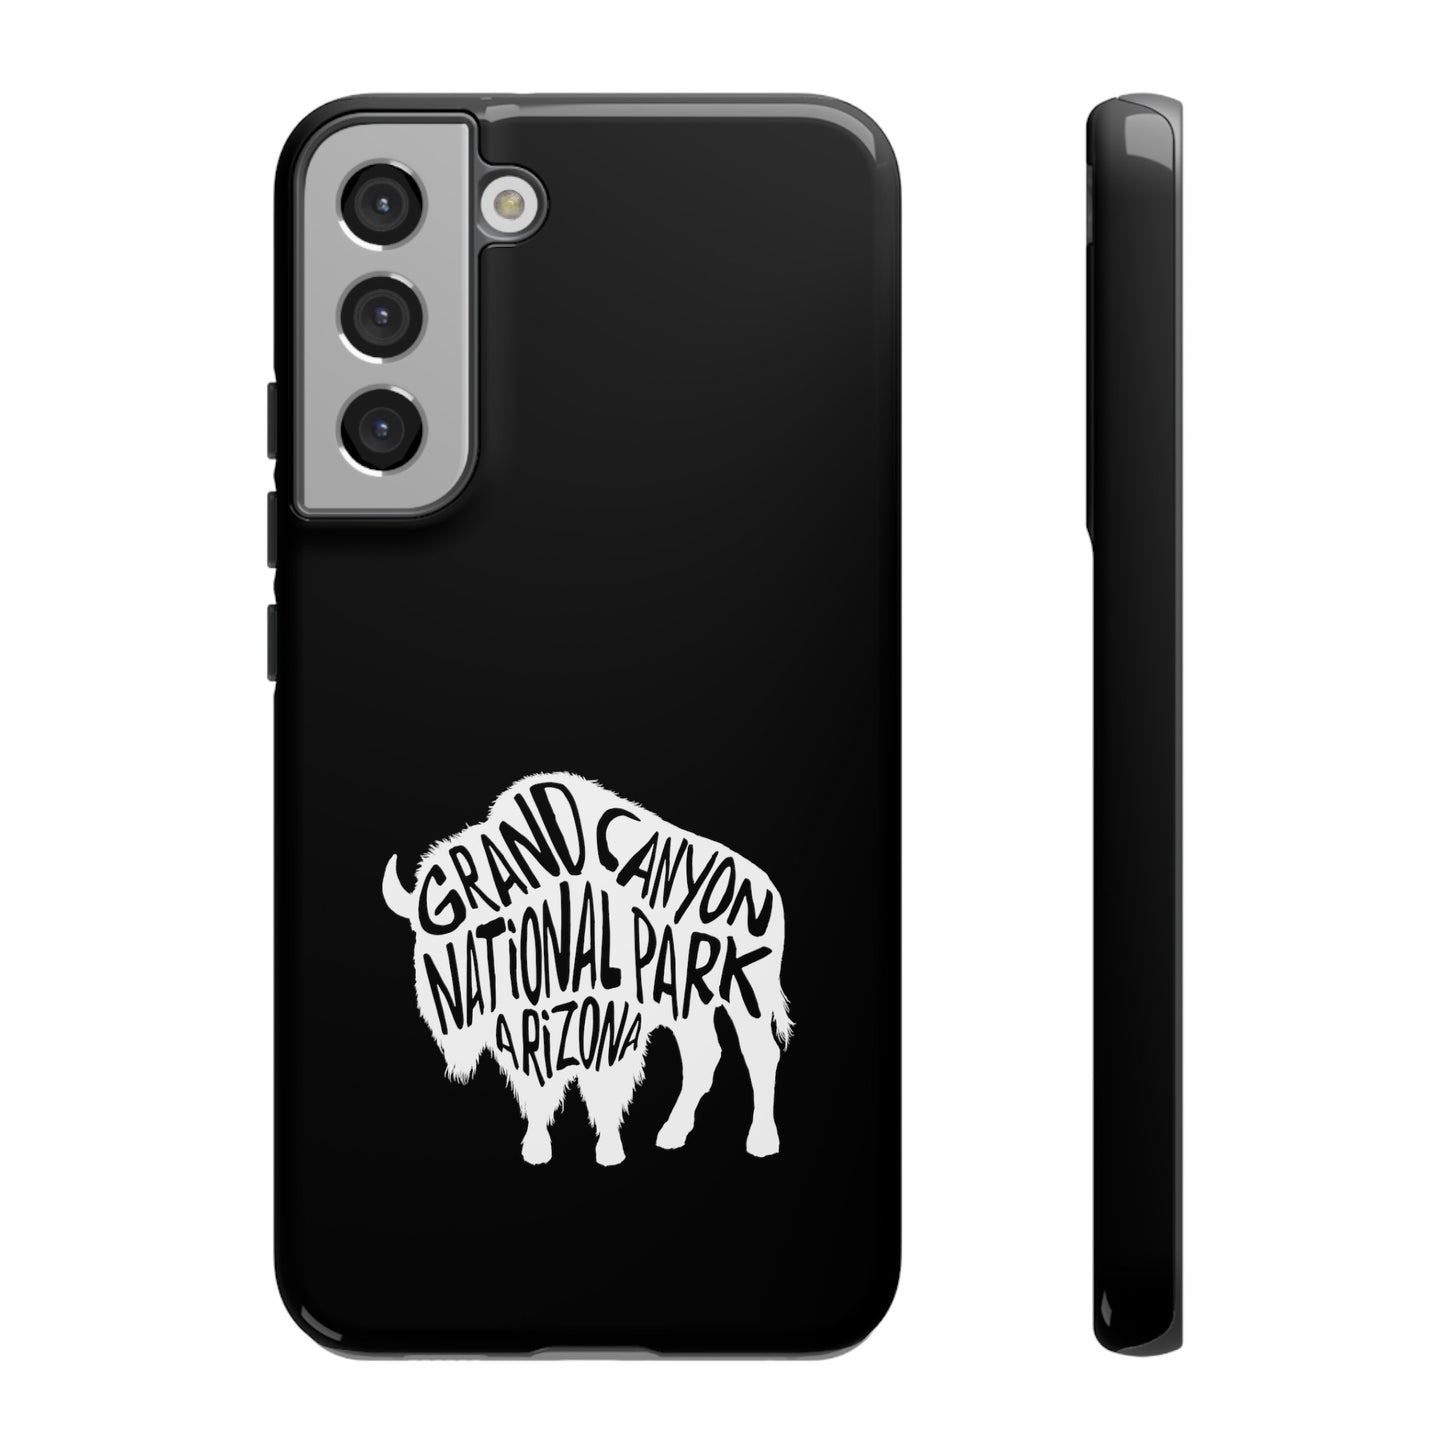 Grand Canyon National Park Phone Case - Bison Design